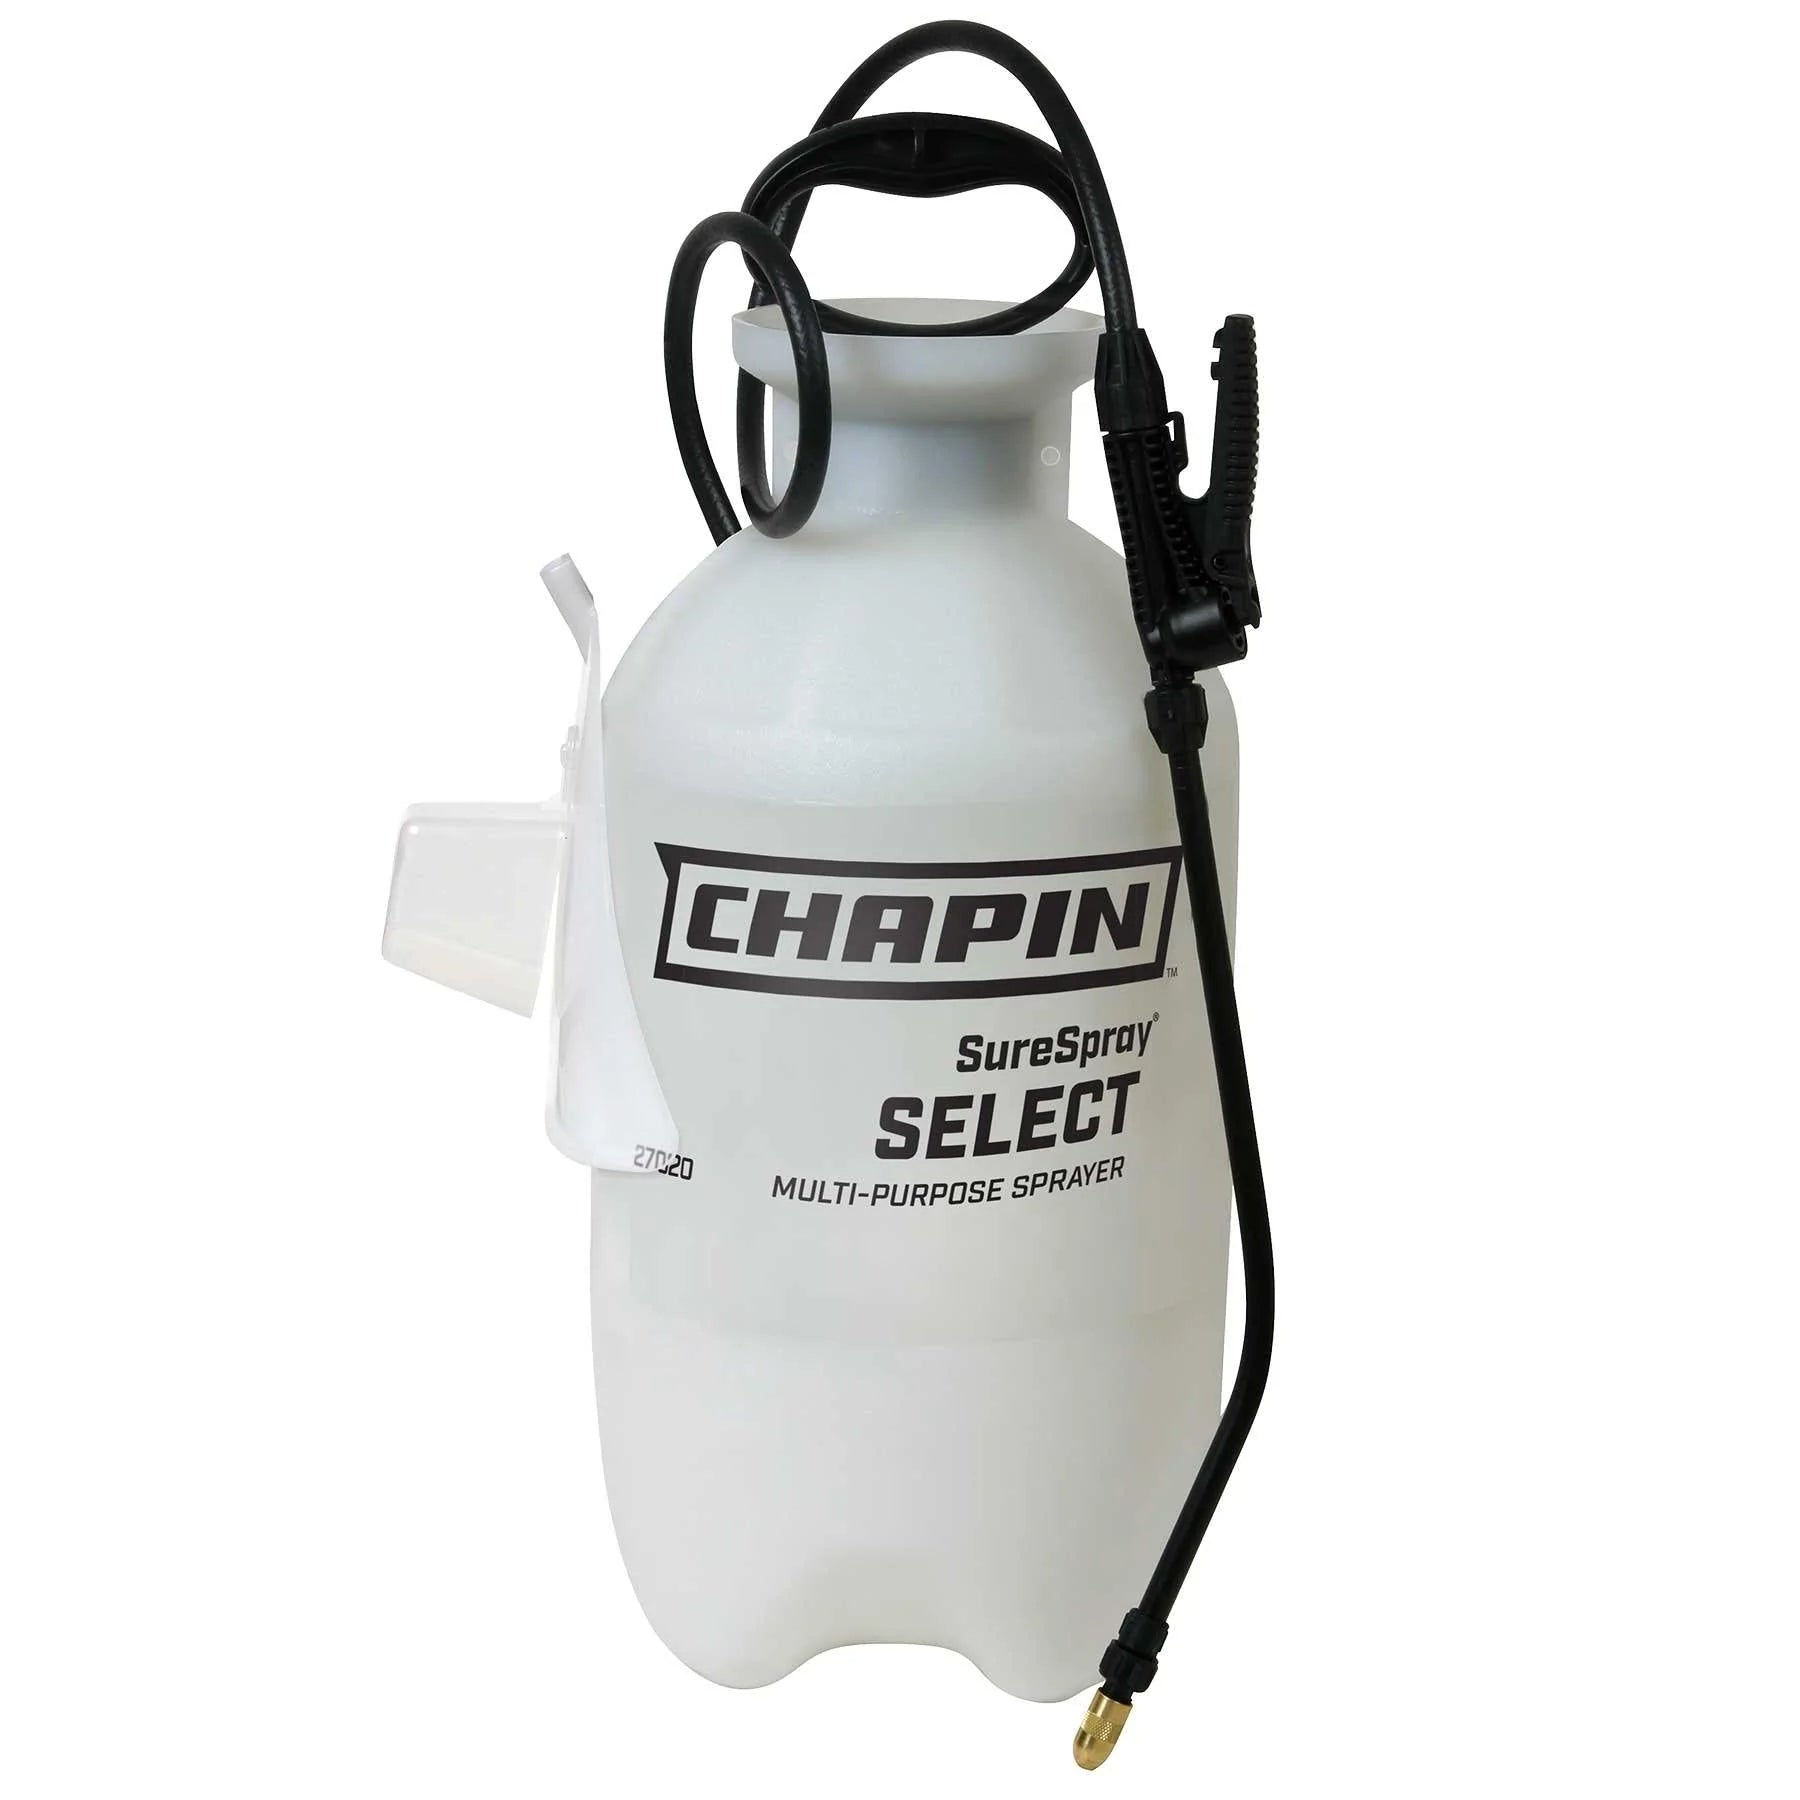 27020: 2-Gallon SureSpray International Select Sprayer Chapin Chapin –